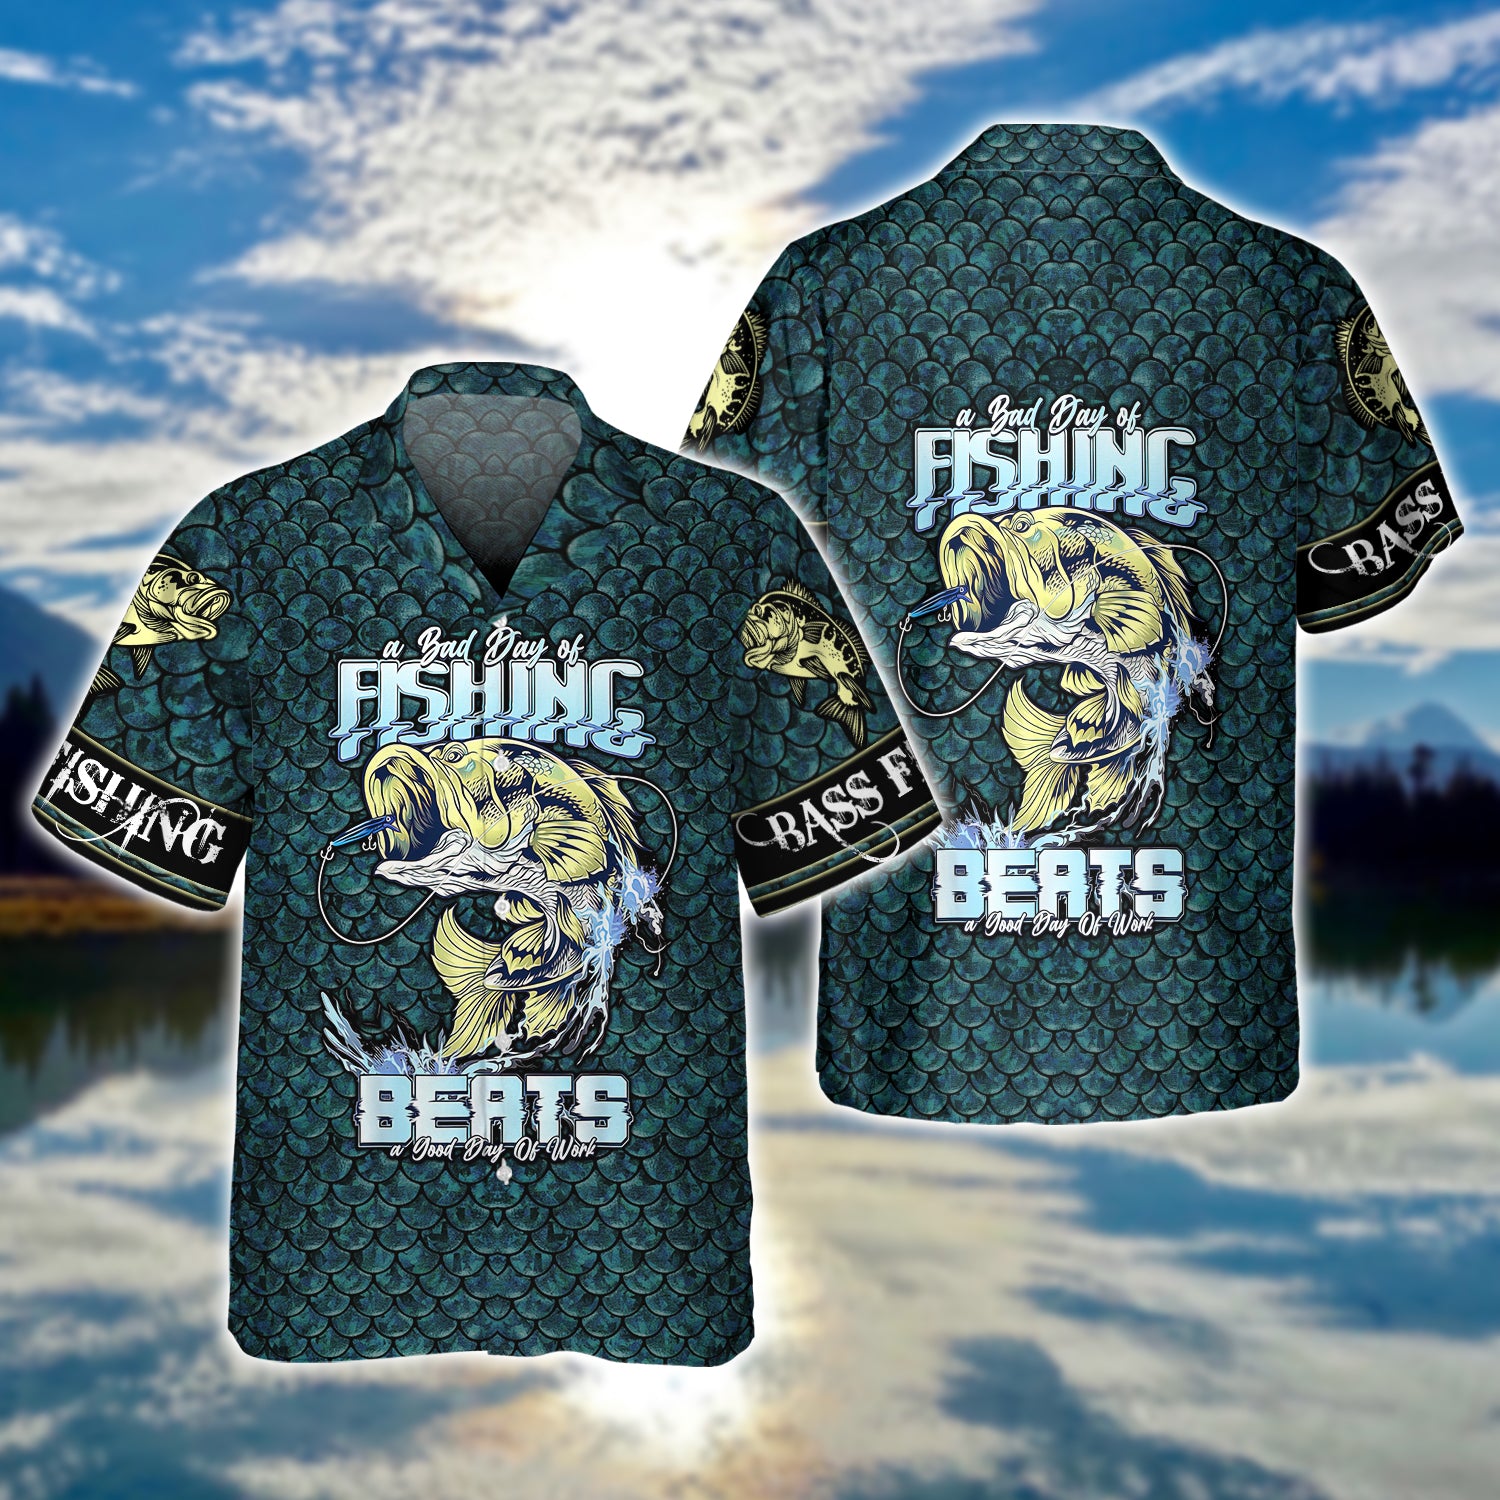 Bass Fishing - 3D Full Print - TT99-957